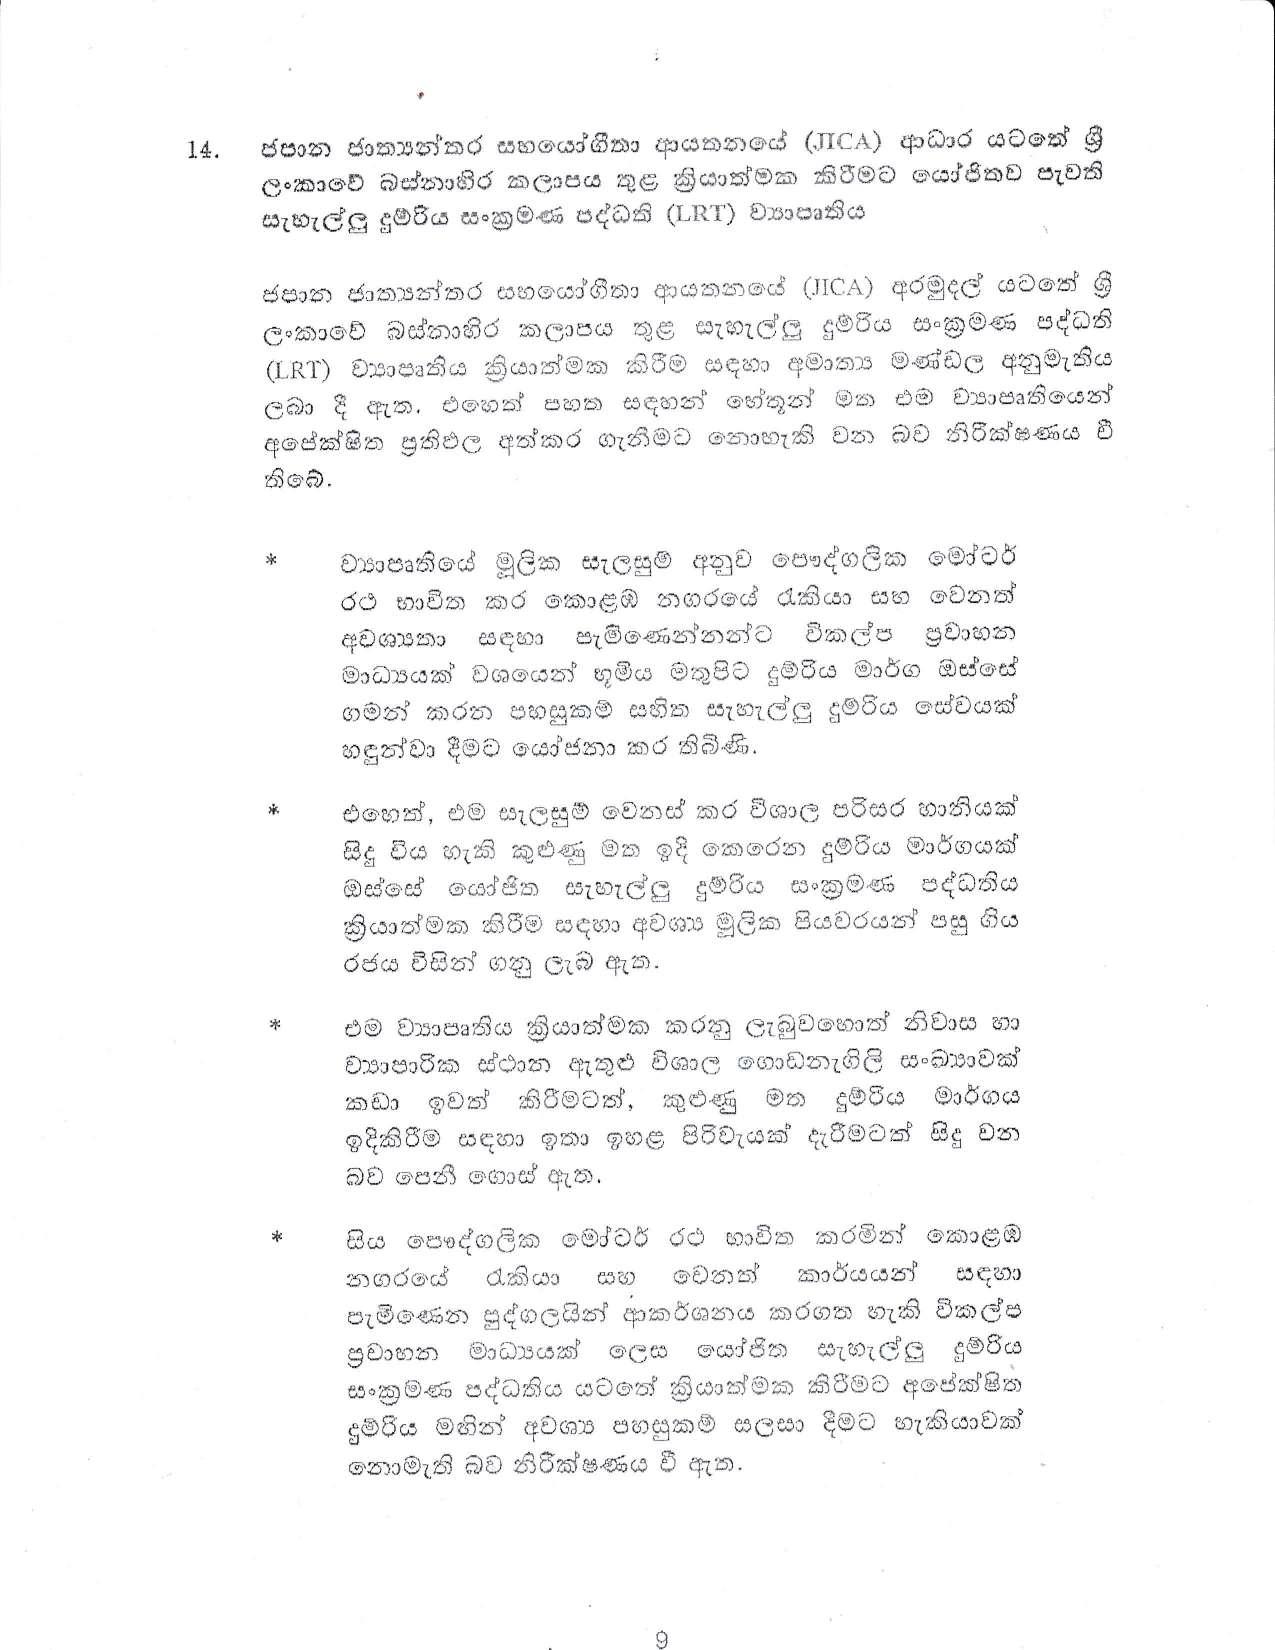 Cabinet Desicion on 28.09.2020 Sinhala page 009